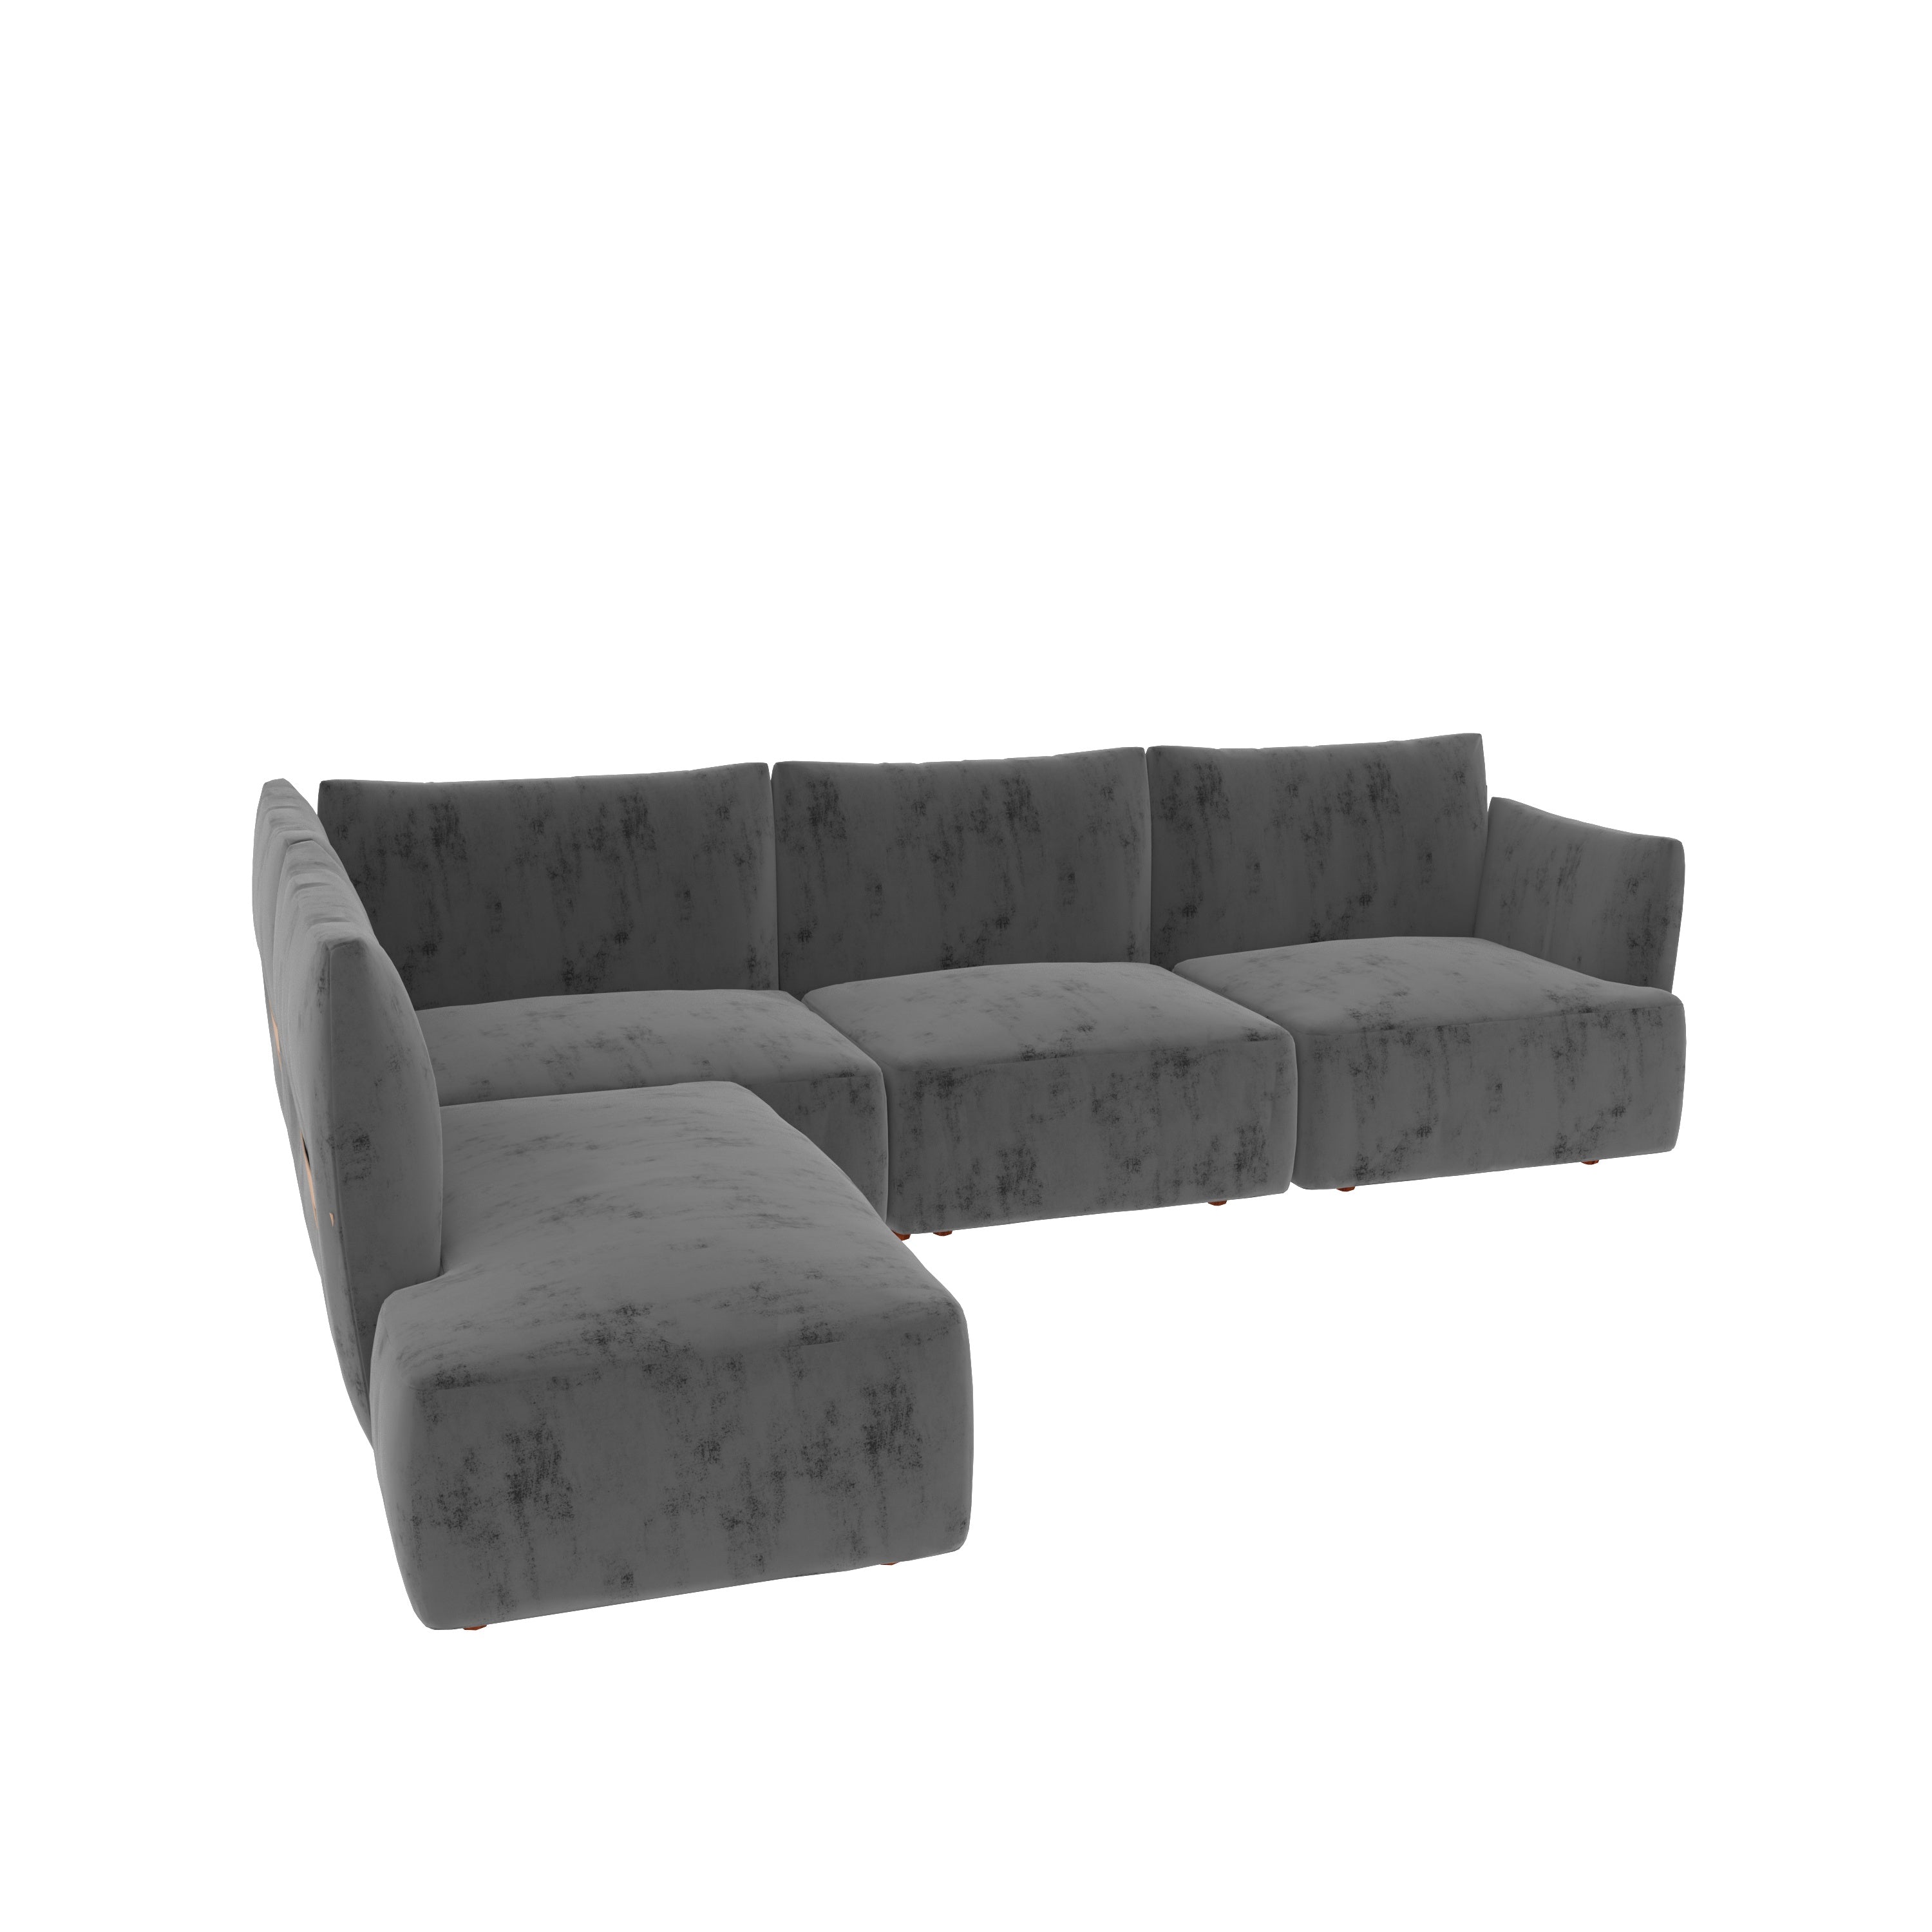 Dark Slat Gray Pastel Coloured with Premium Comfort L Shaped 4 Seater Sofa Set for Home Sofa